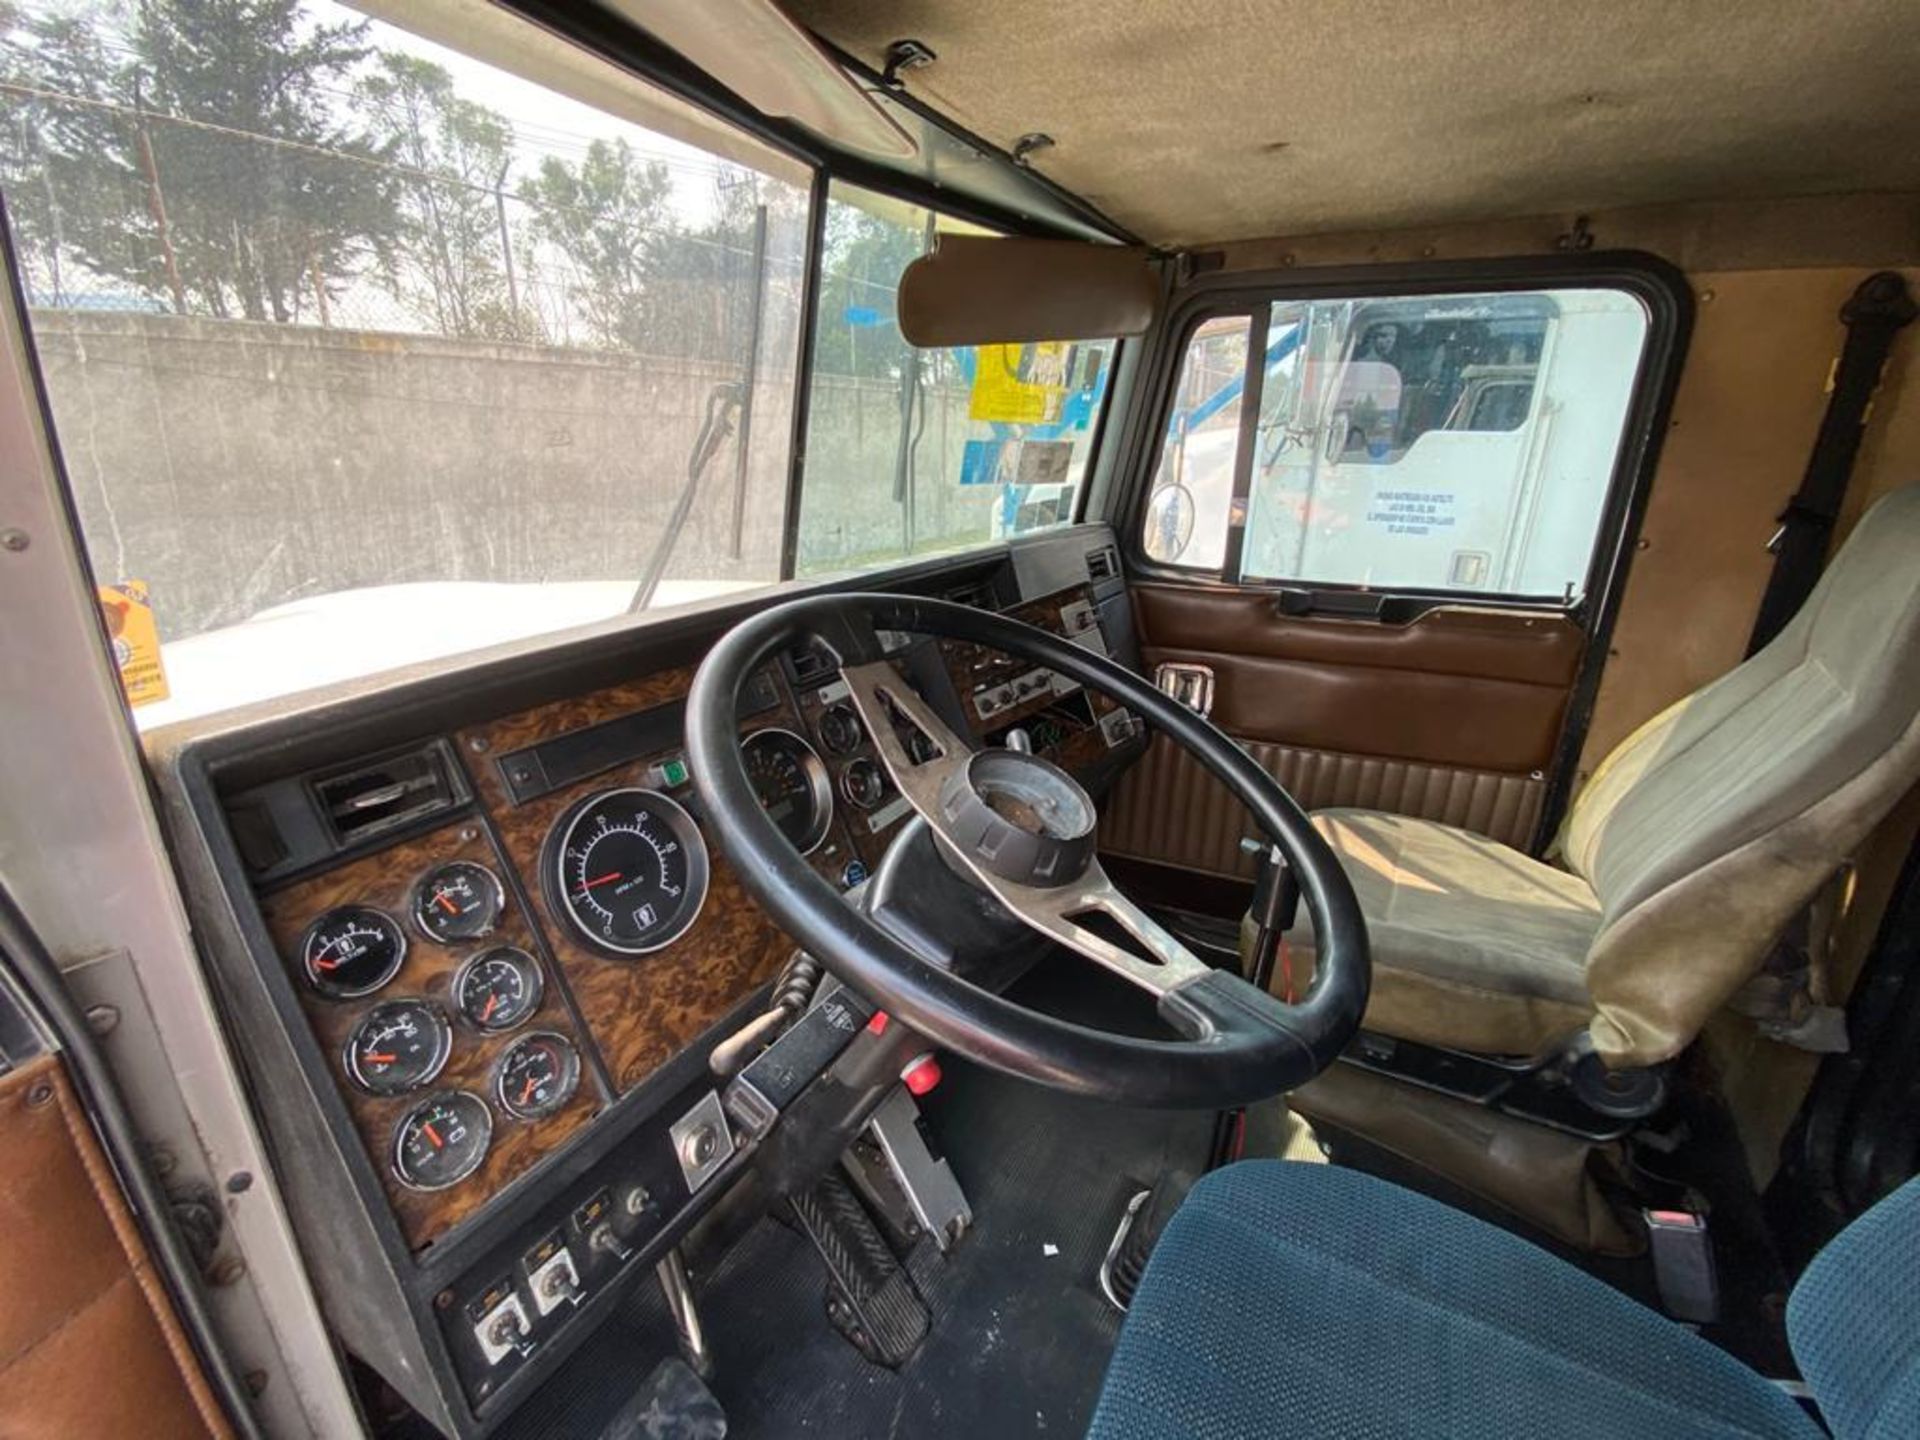 1999 Kenworth Sleeper truck tractor, standard transmission of 18 speeds - Image 46 of 69